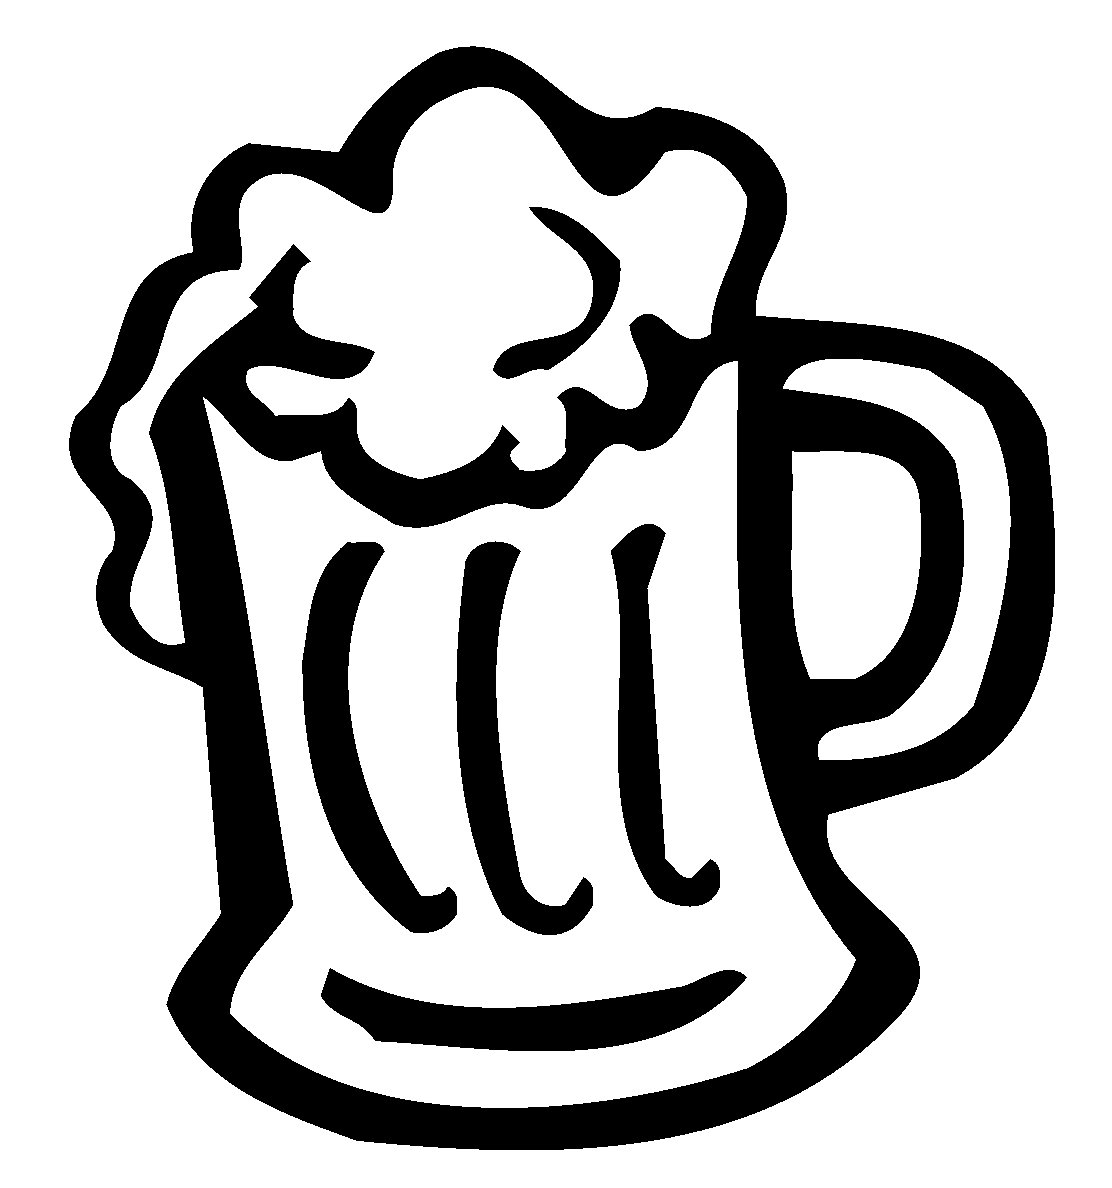 Beer Mug Decal, Beer Mug Sticker